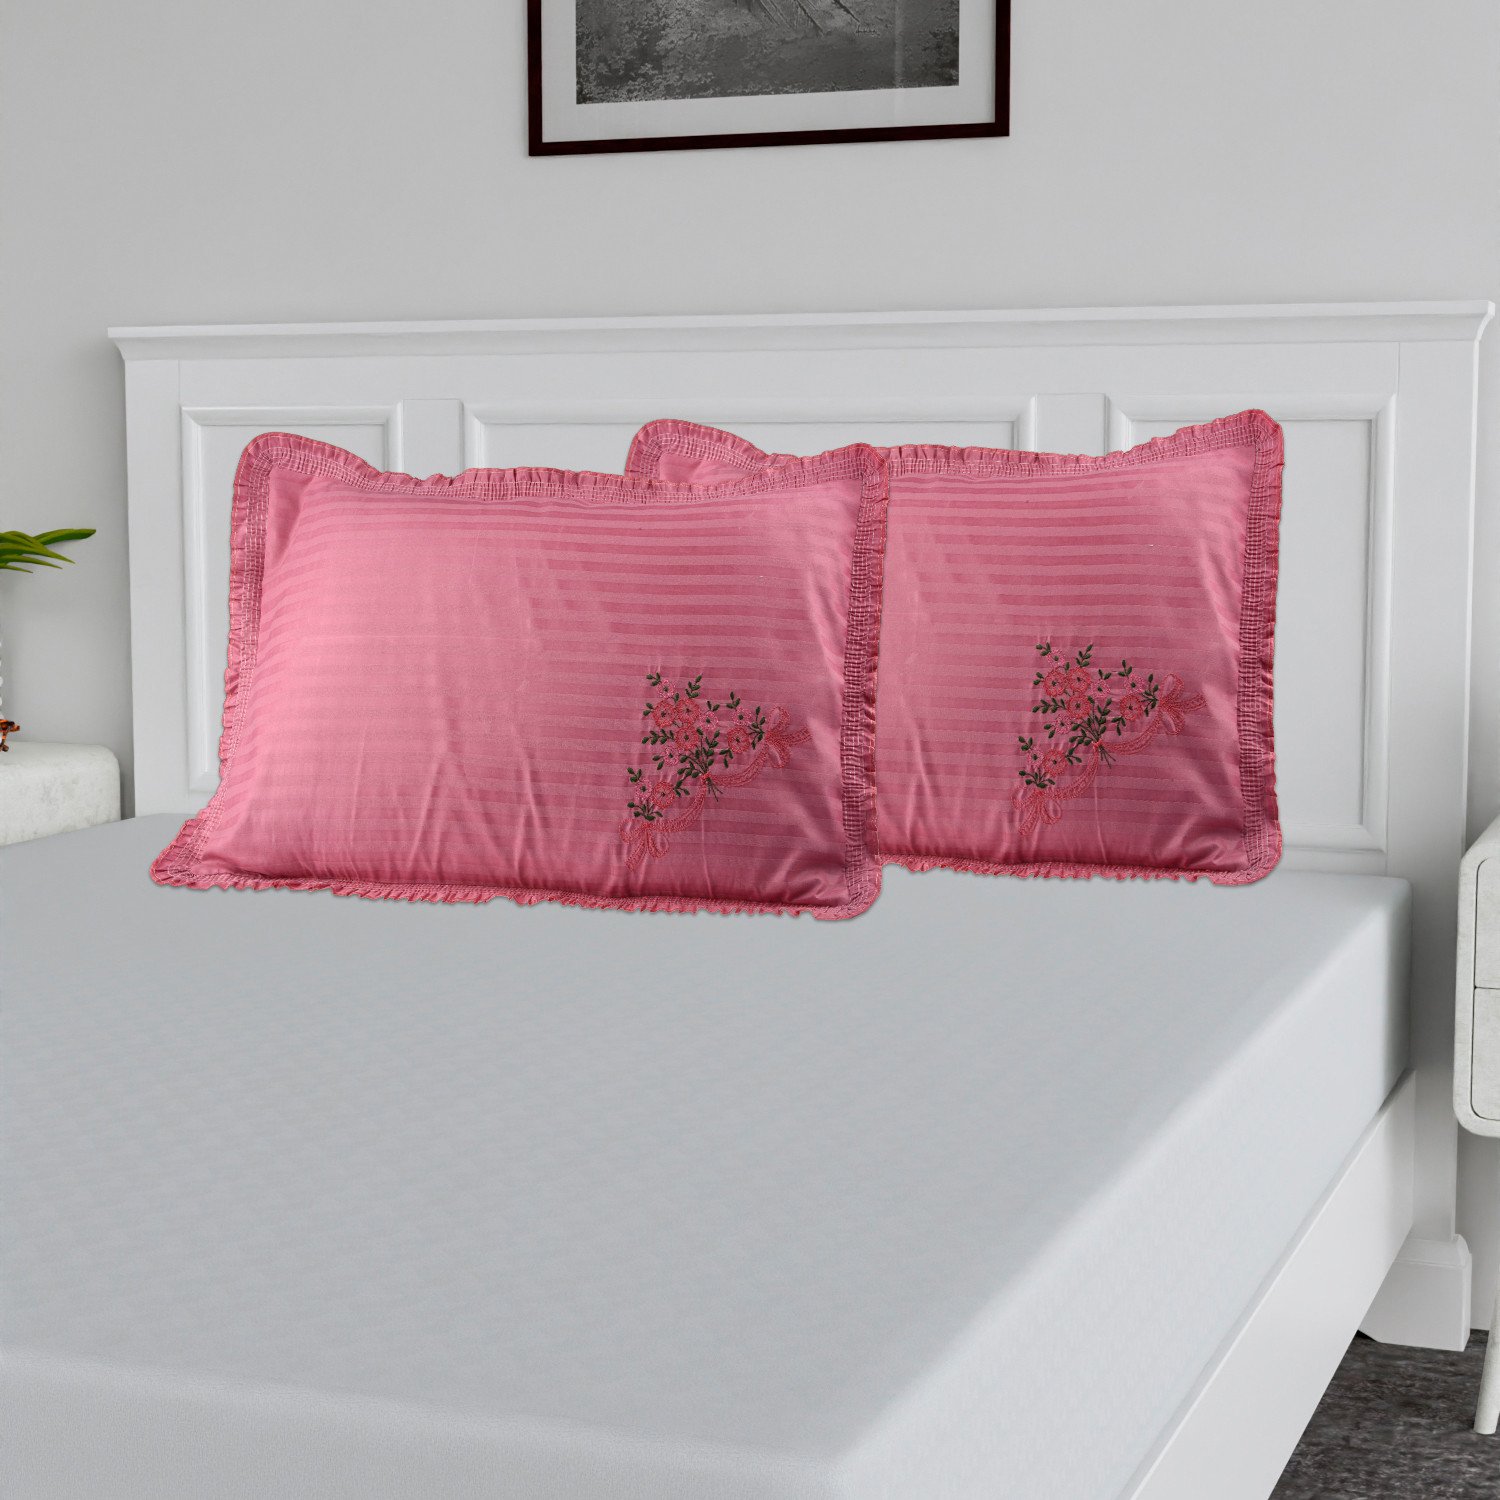 Kuber Industries Pillow Cover | Cotton Pillow Cover Set | Cushion Pillow Cover Set | Premium Pillow Cover Set for Bedroom | Lining Frill Pillow Cover Set | 4 Piece Set | Multi